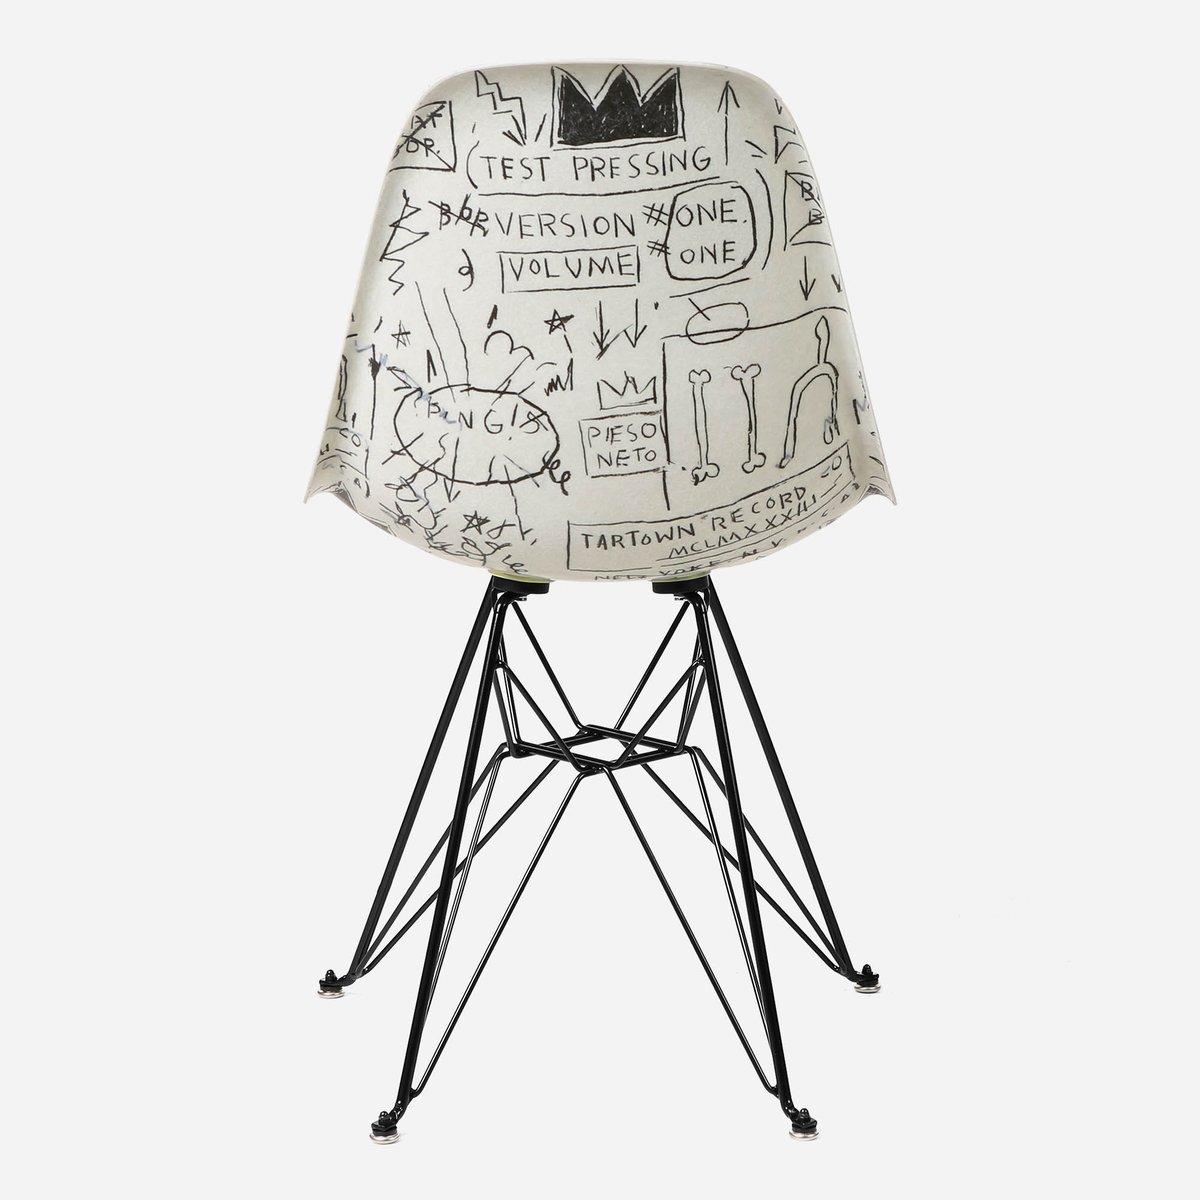 Case study furniture chair (Bats)
Fiberglass side shell Eiffel chair by Modernica
32 H x 18.5 W x 21 D inches
seat height 18